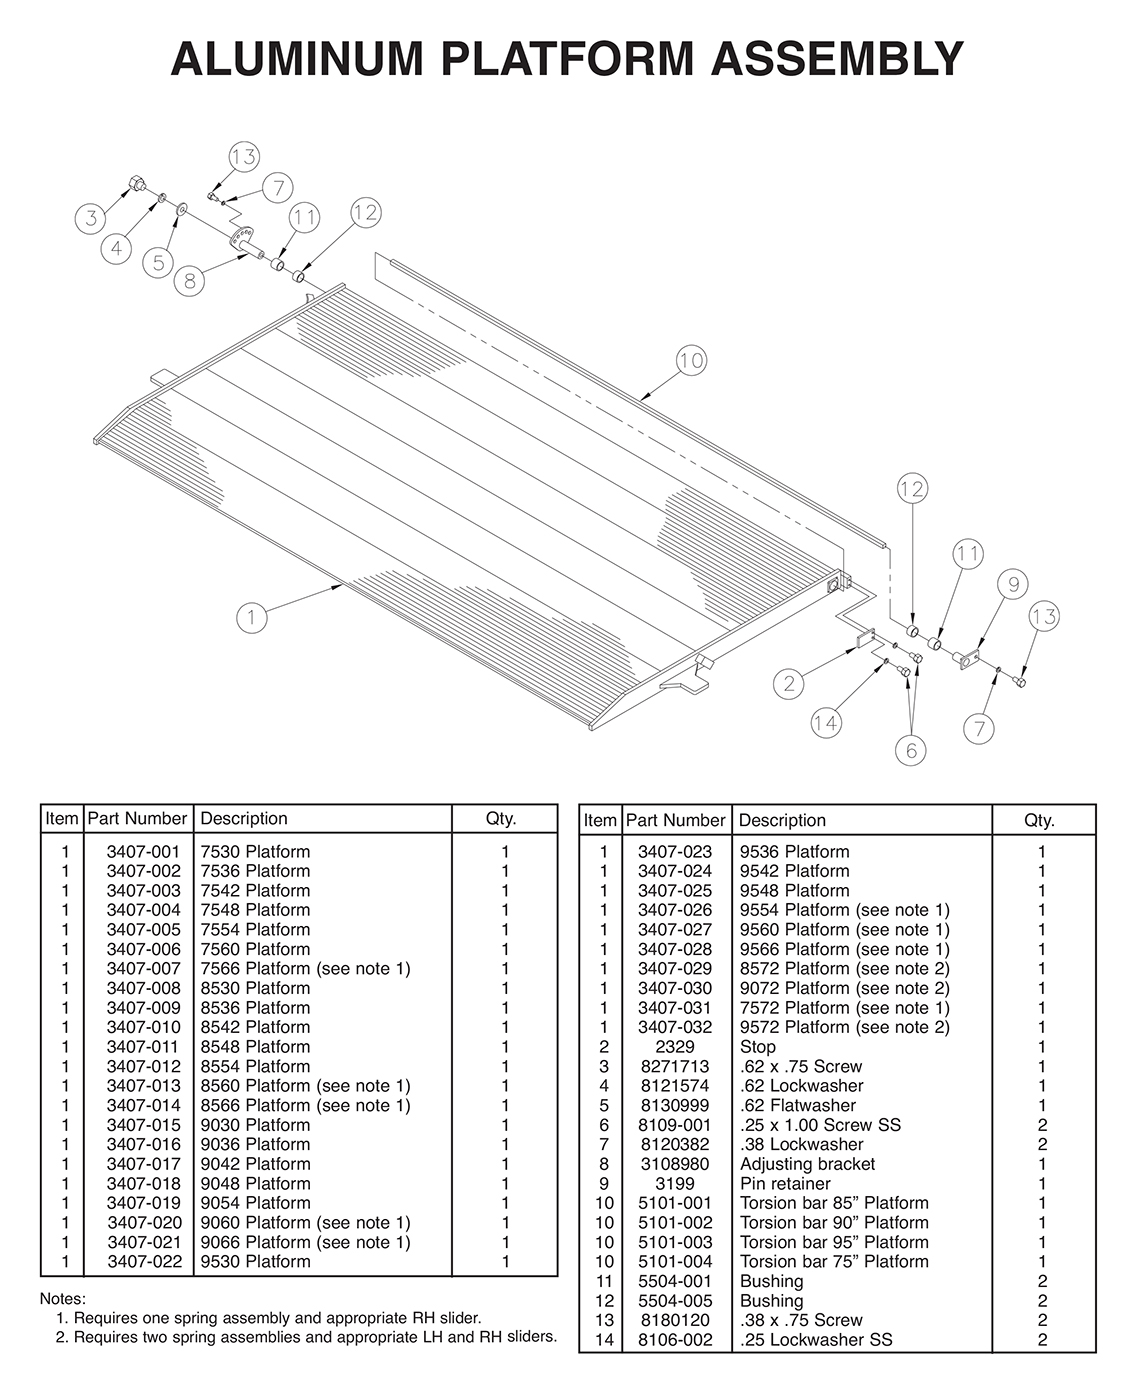 TVLR 20/20A Aluminum Platform Assembly Diagram